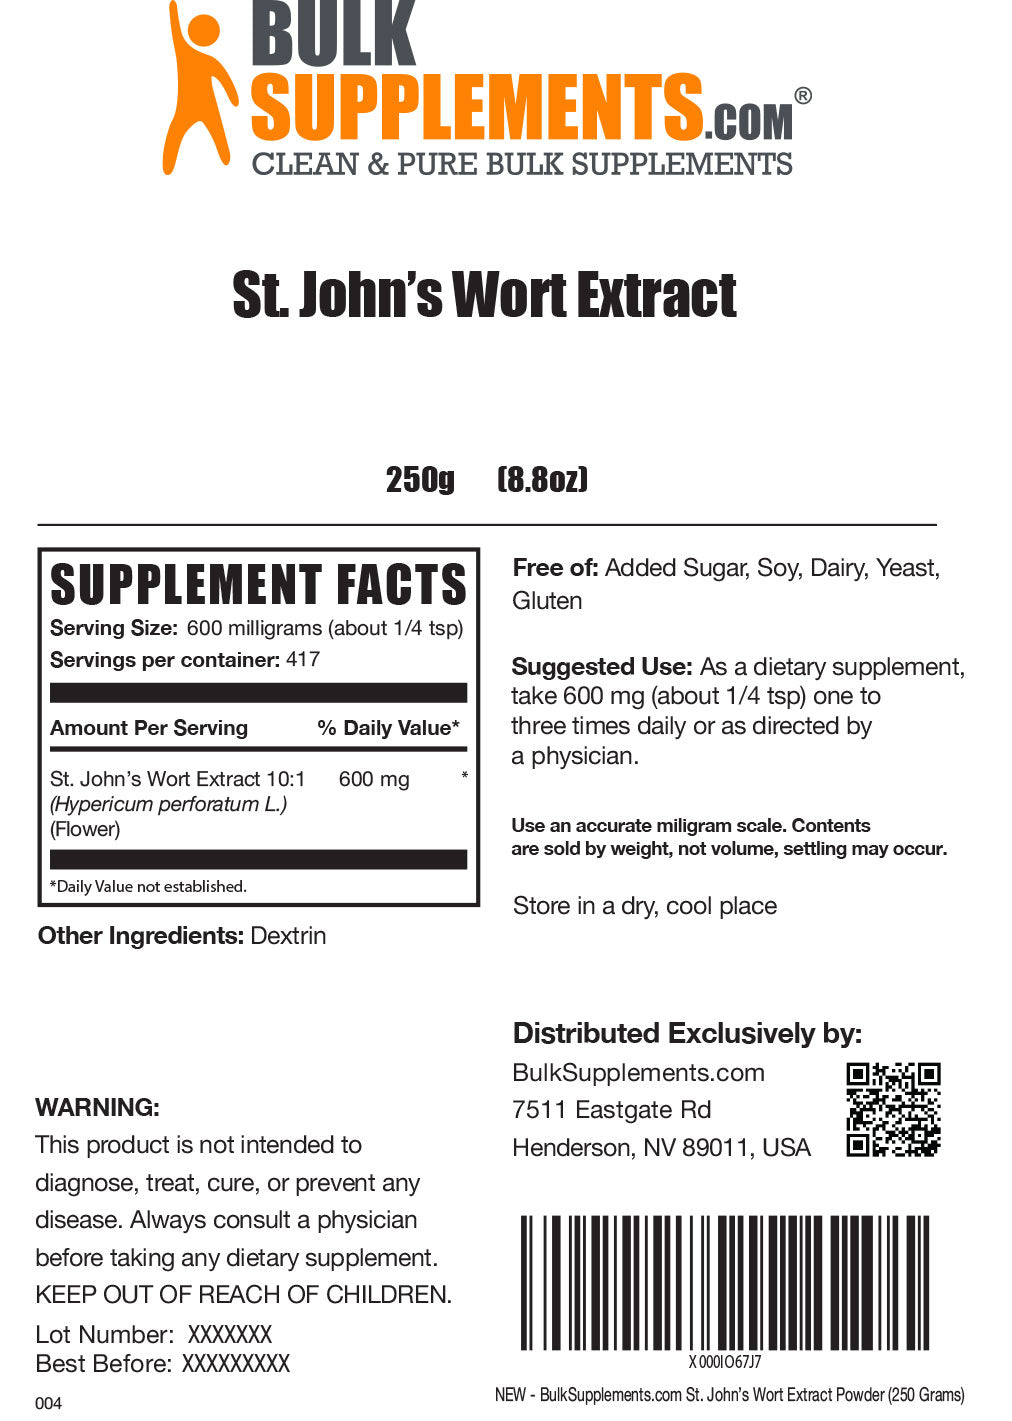 St. John's Wort Extract Powder Label 250g